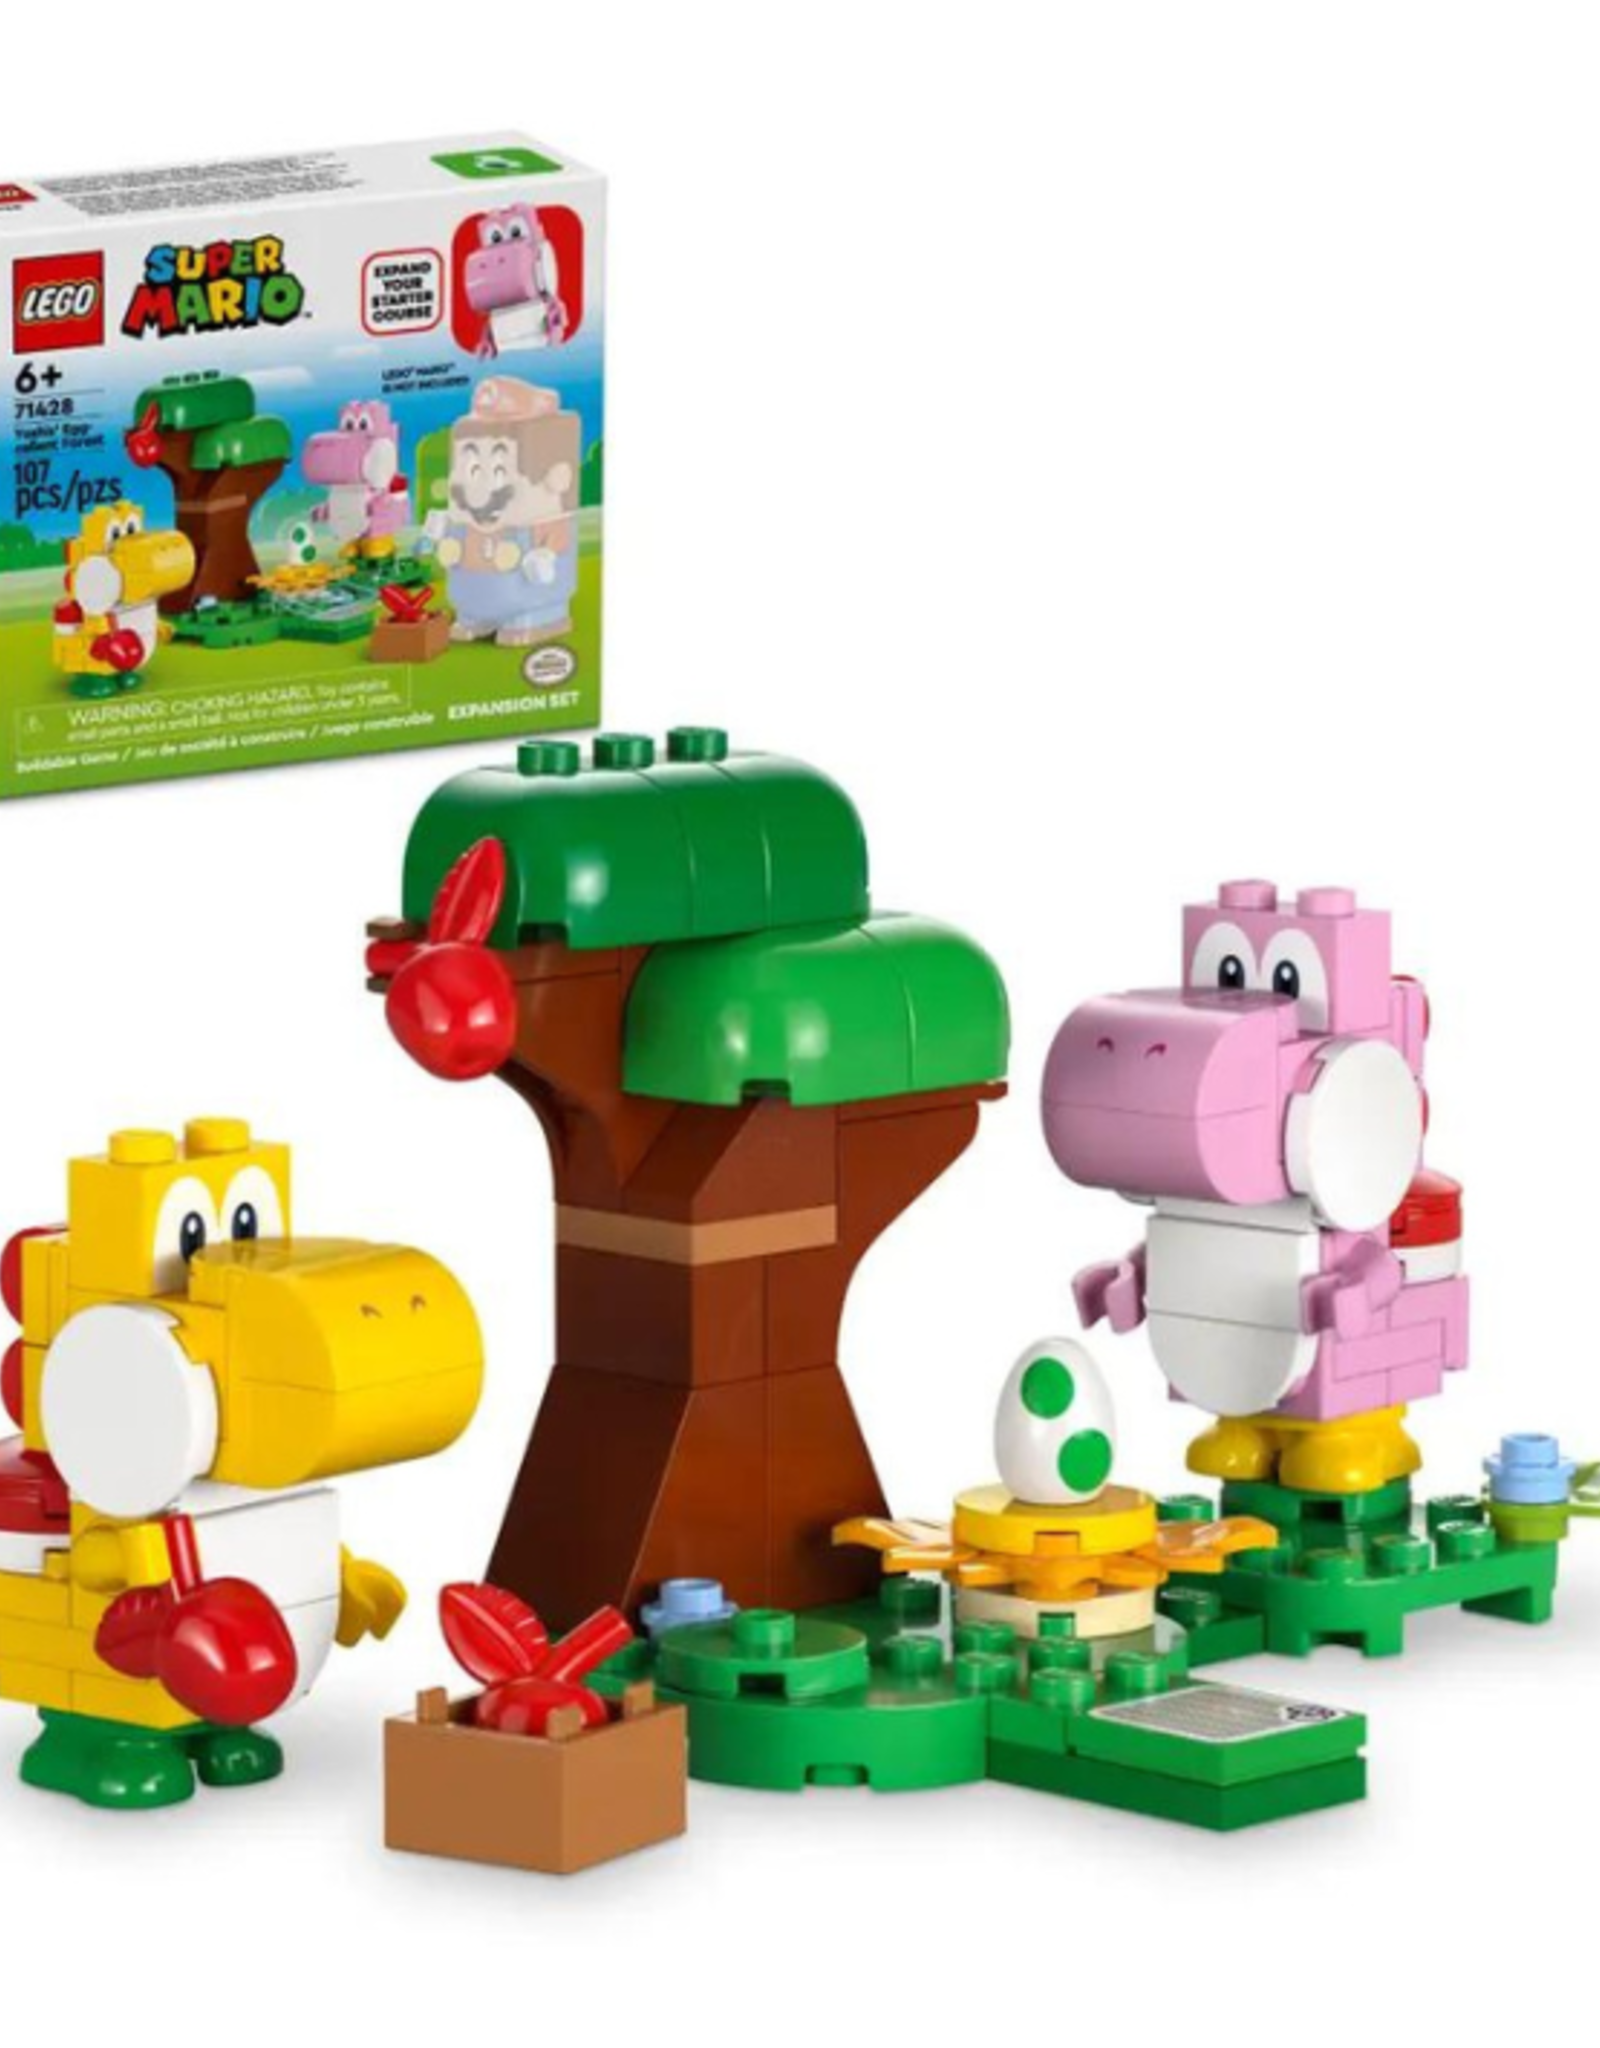 Lego Lego - Super Mario - 71428 - Yoshis' Egg-cellent Forest Expansion Set